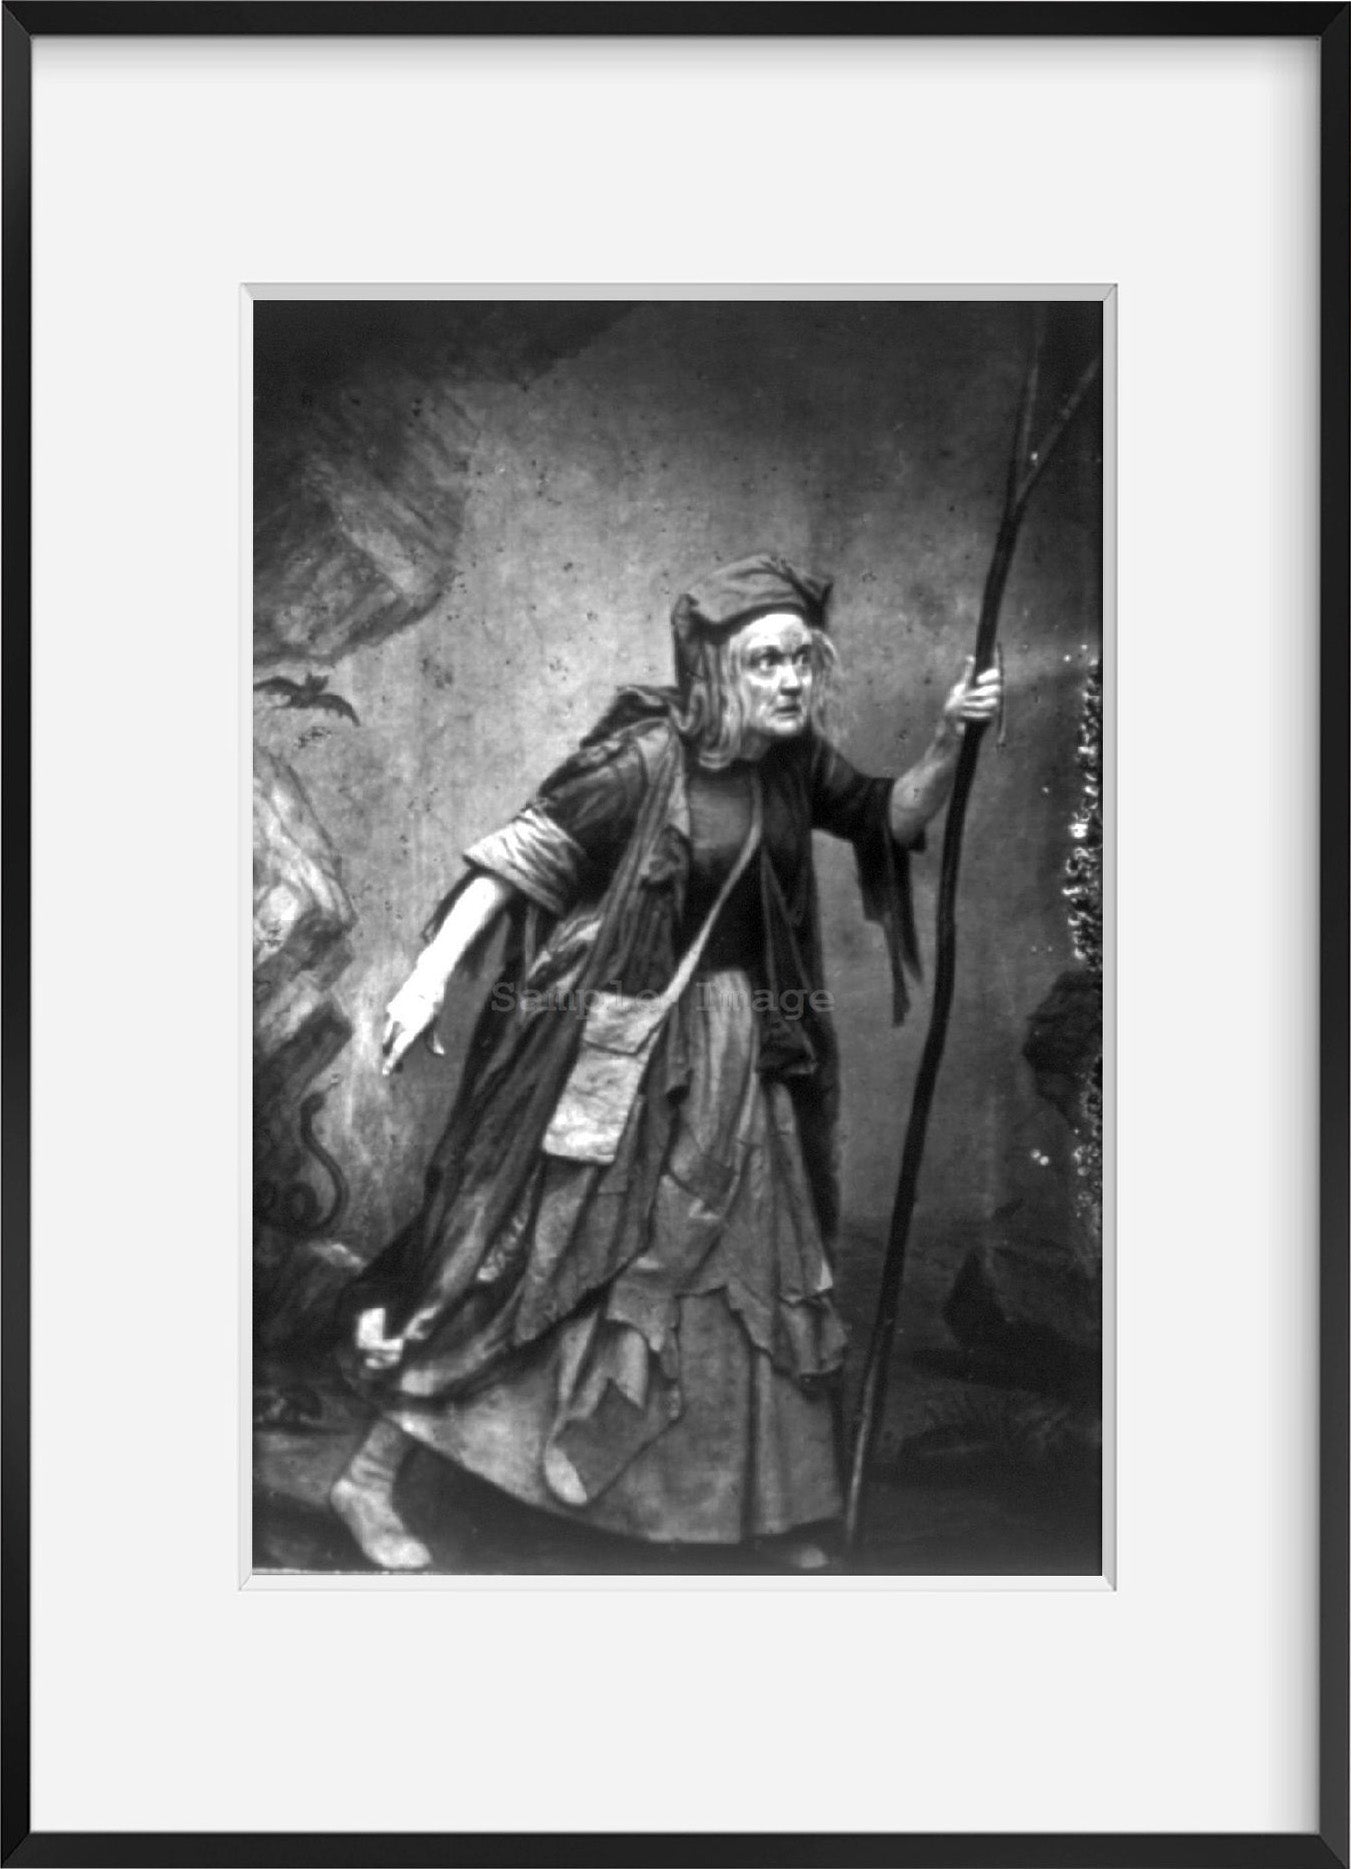 ca. 1855, printed later photograph of Charlotte Cushman as Meg Merrilies in "Guy